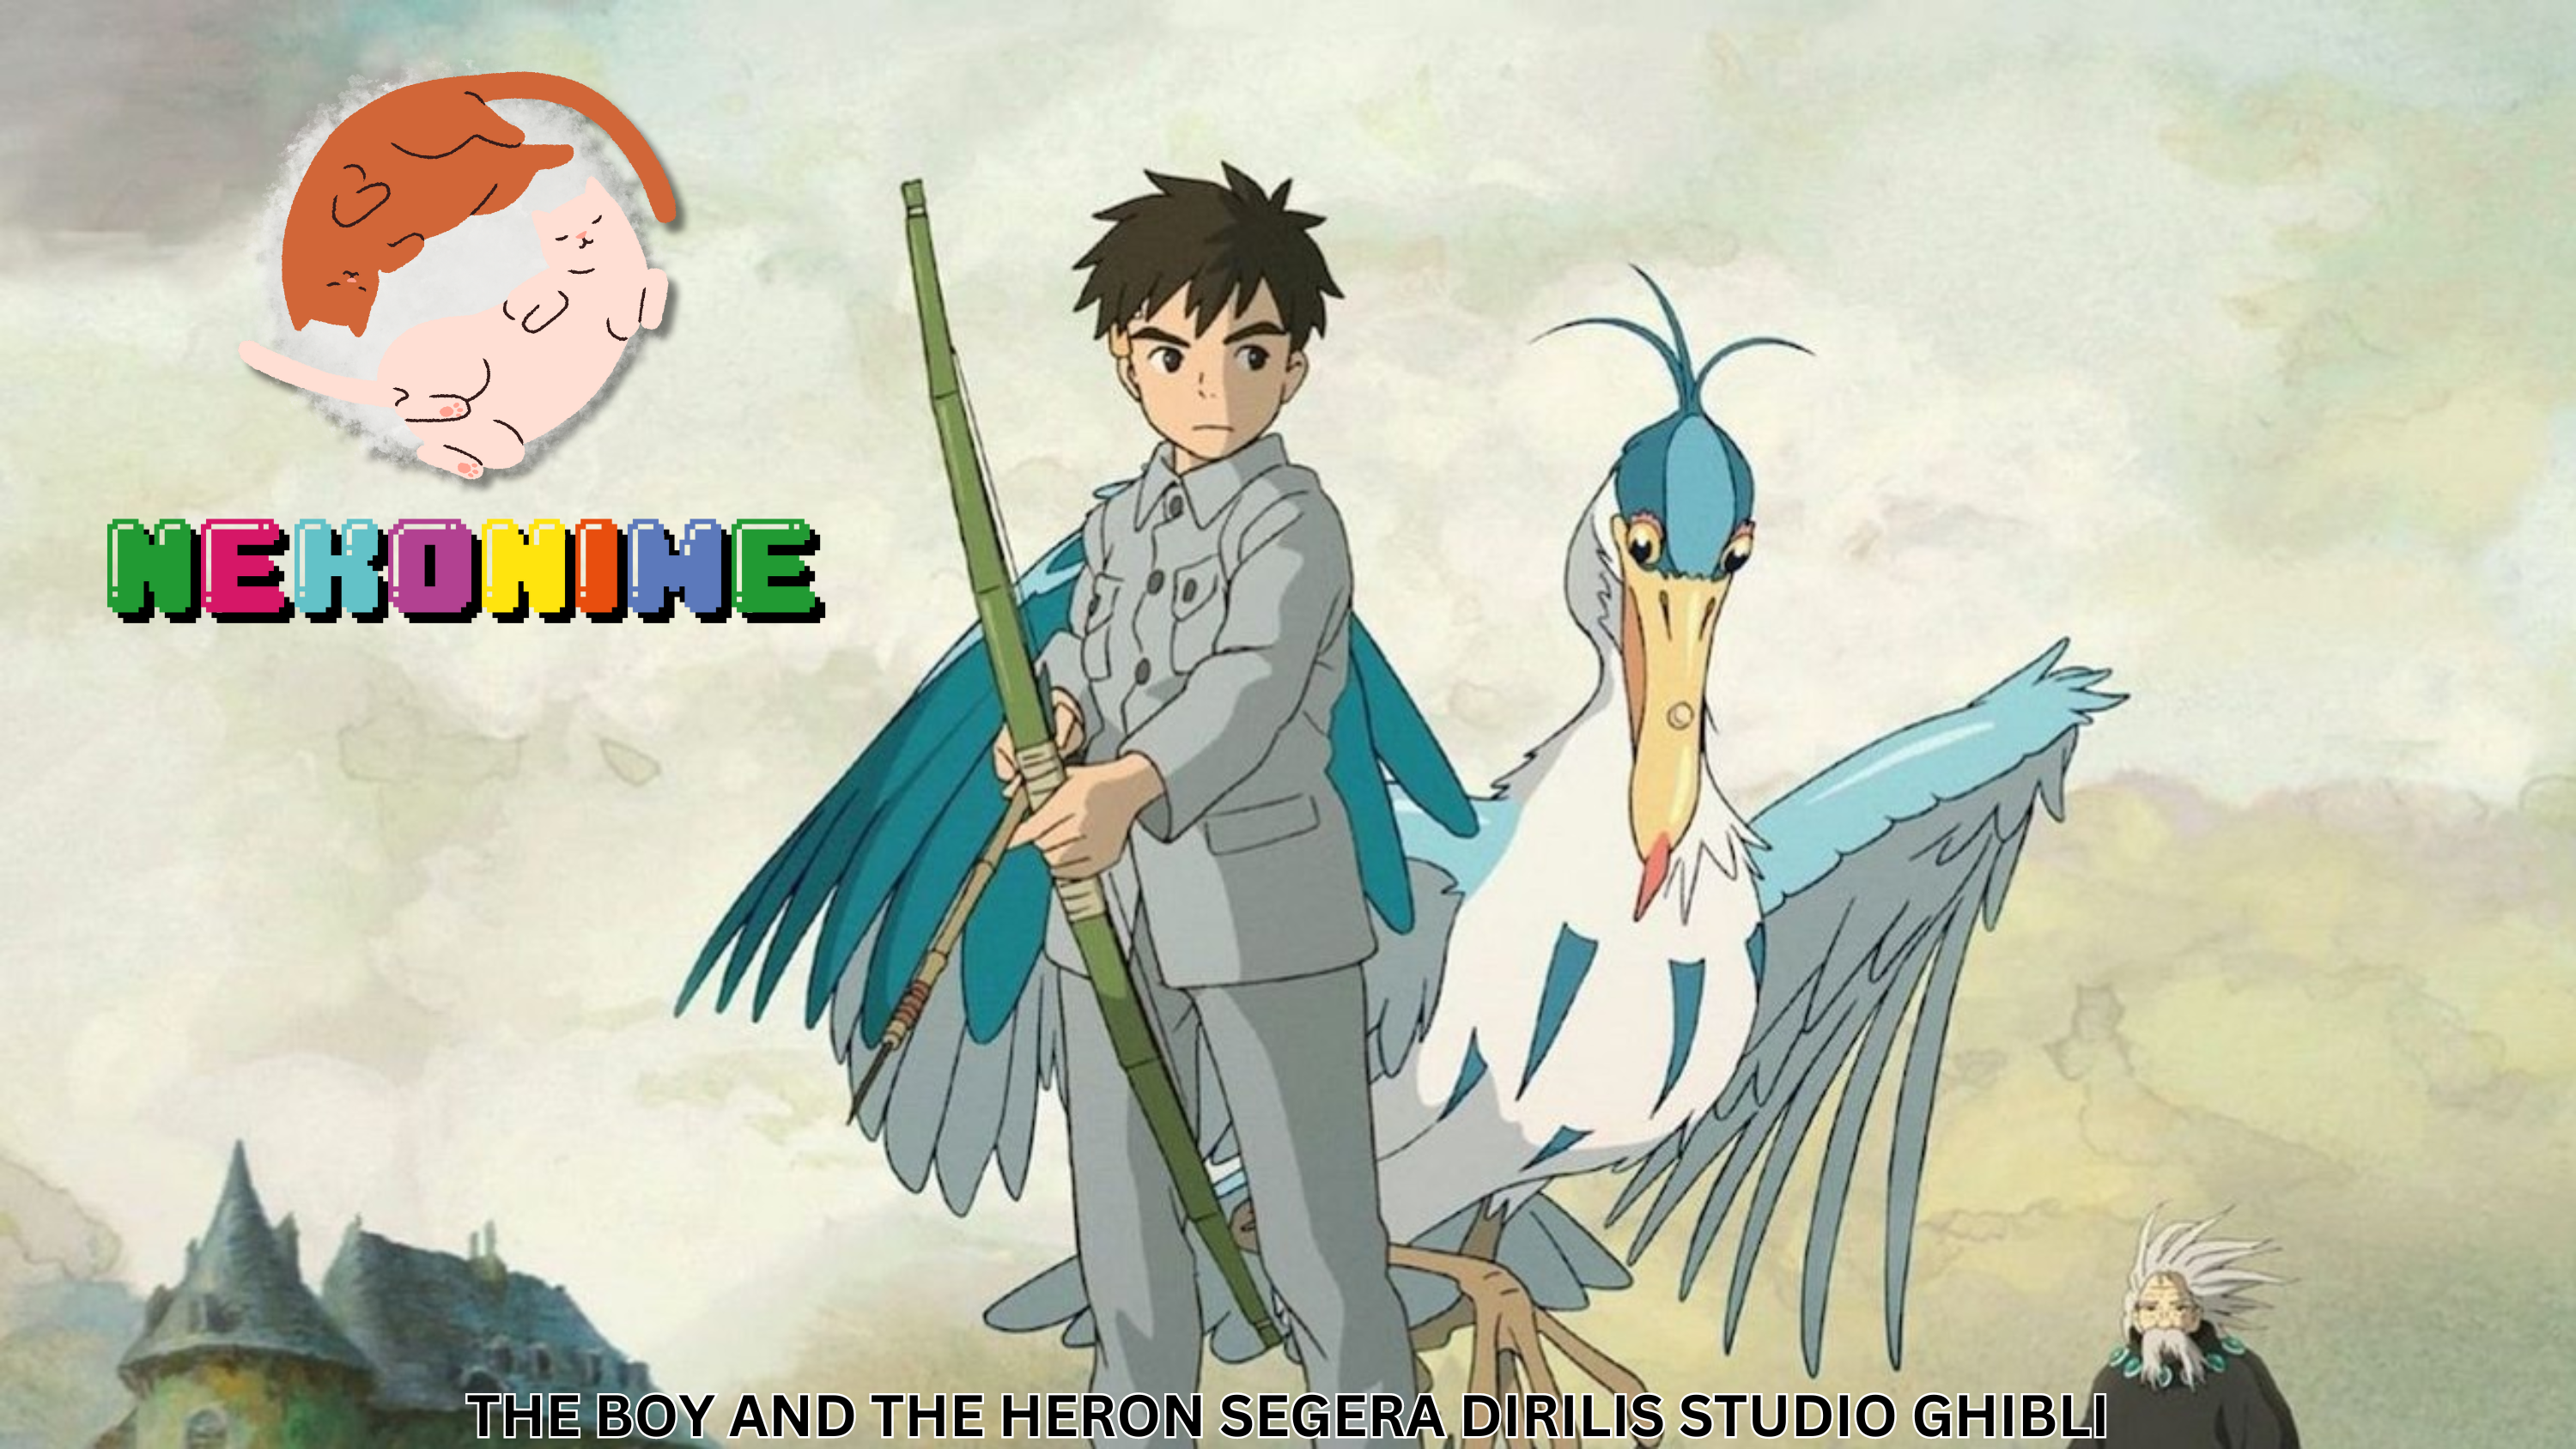 The Boy and The Heron Segera Dirilis Studio Ghibli